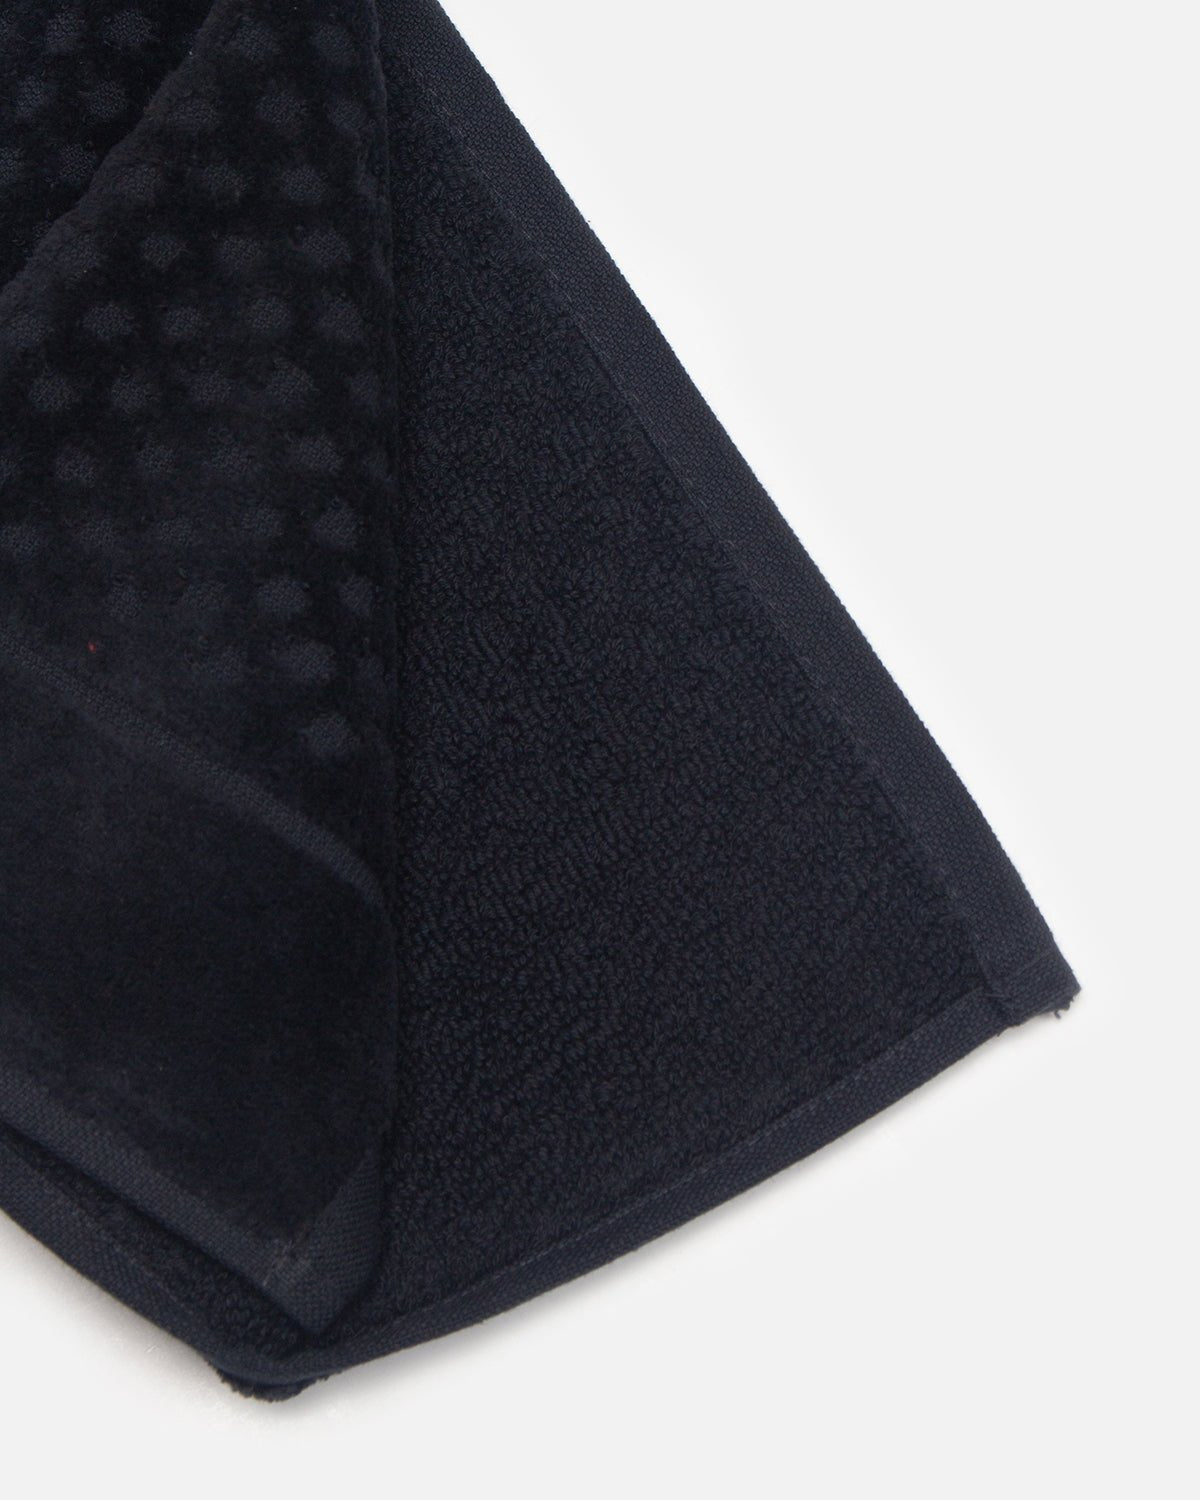 NFFC Black Textured Jacquard Tri-fold Golf Towel - Nottingham Forest FC